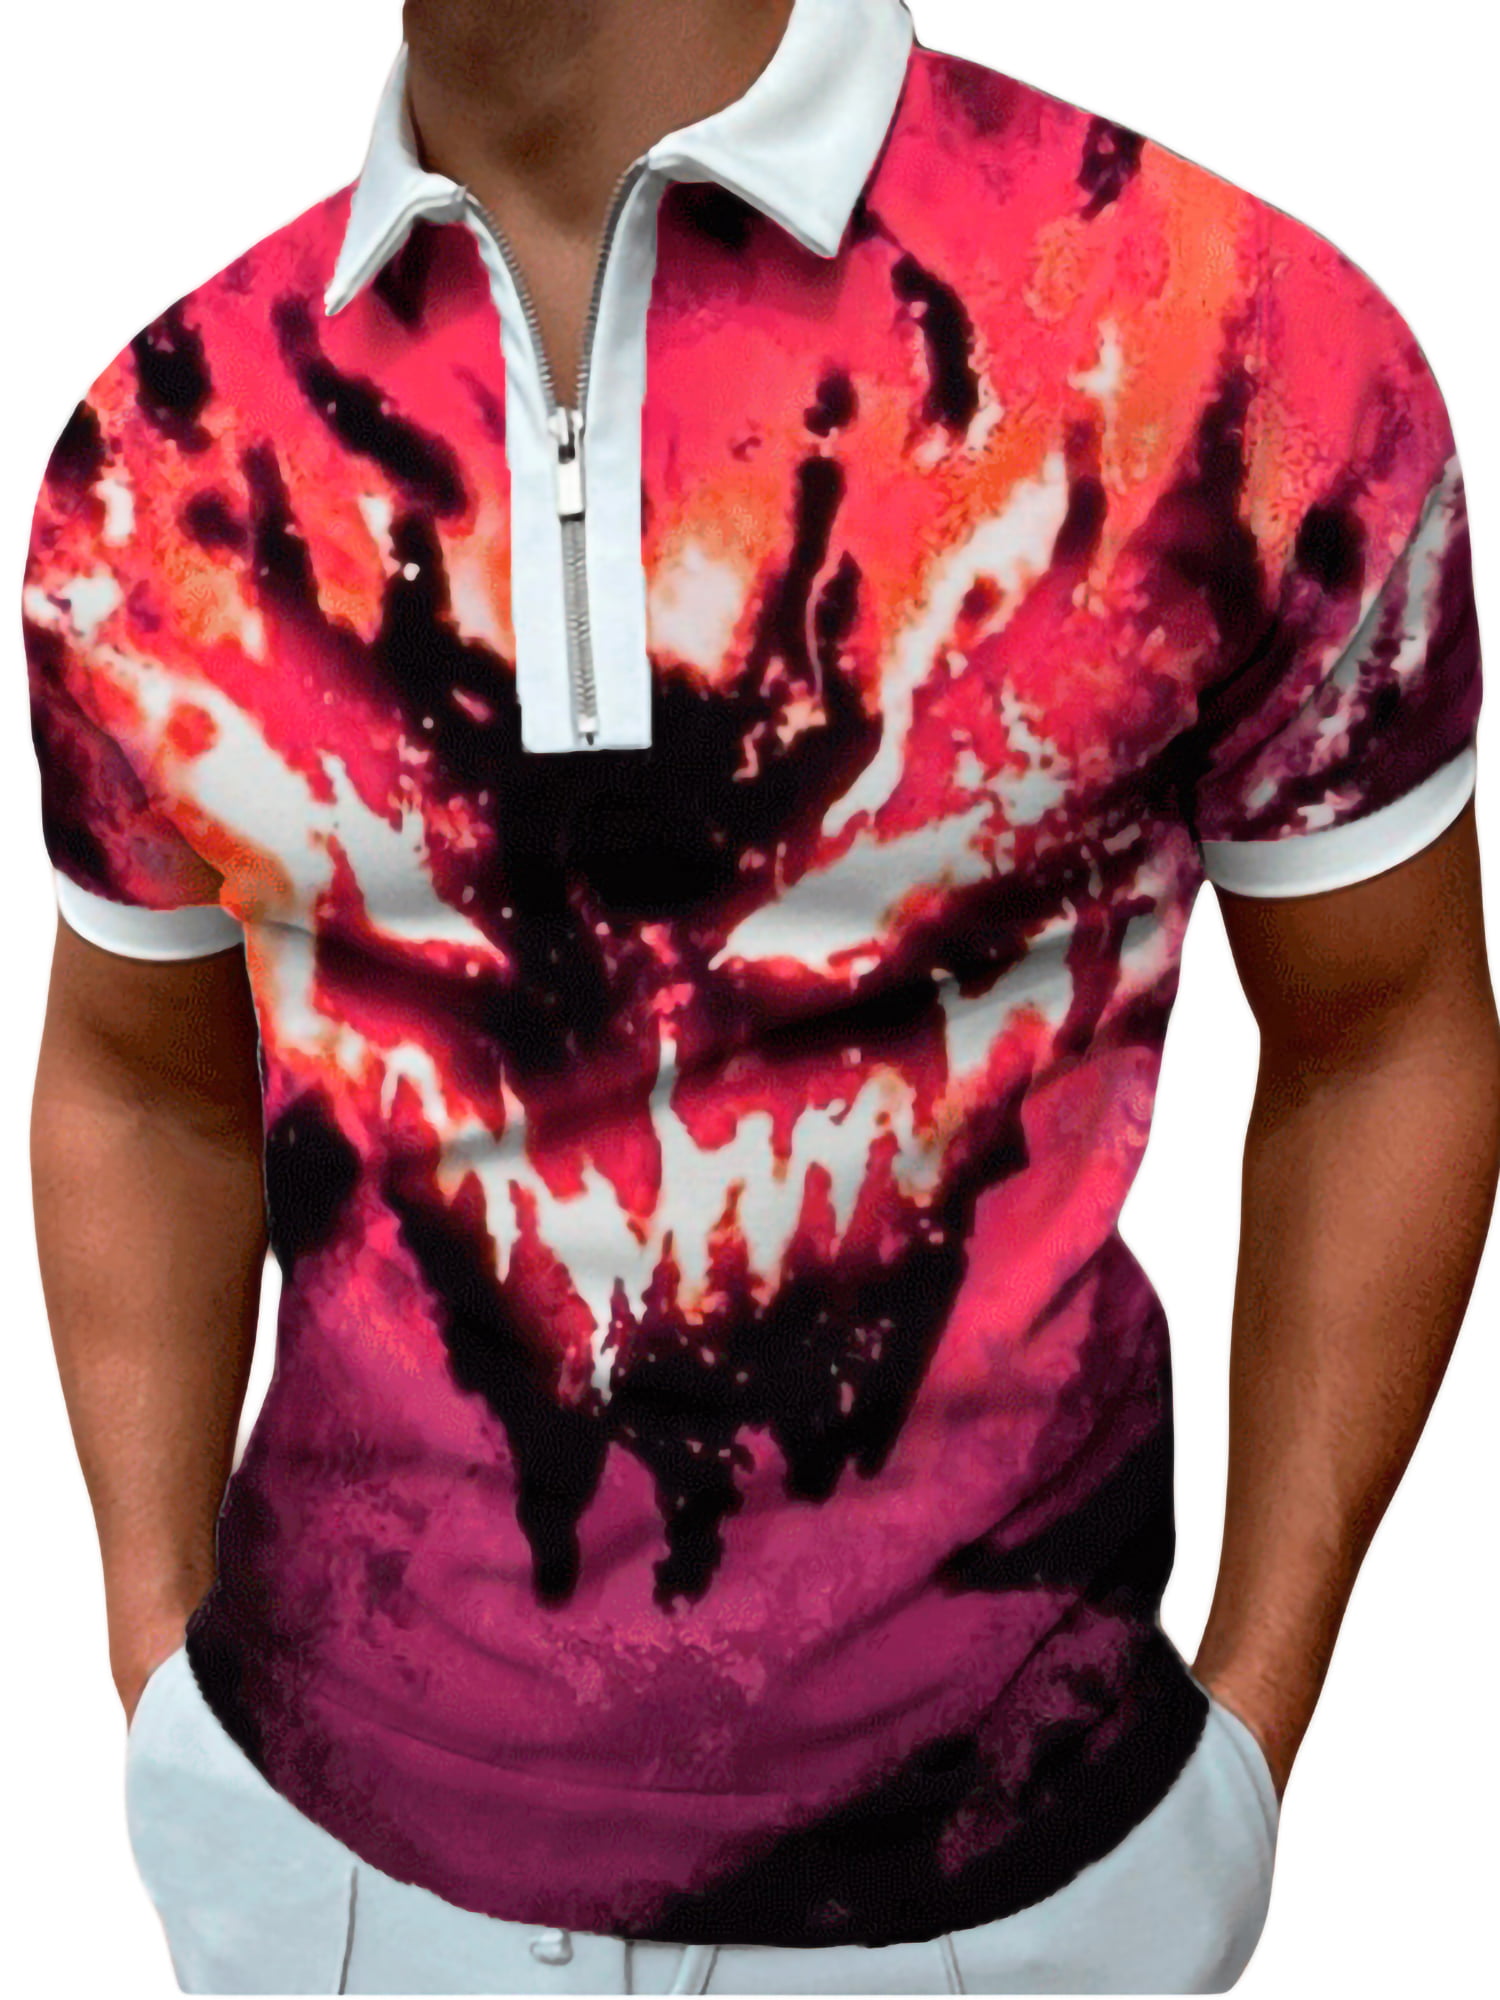 SFE Fashion Polo Shirts,Men Casual Summer Solid Turn-Down Collar Short Sleeve T-Shirt Tops Blouse 